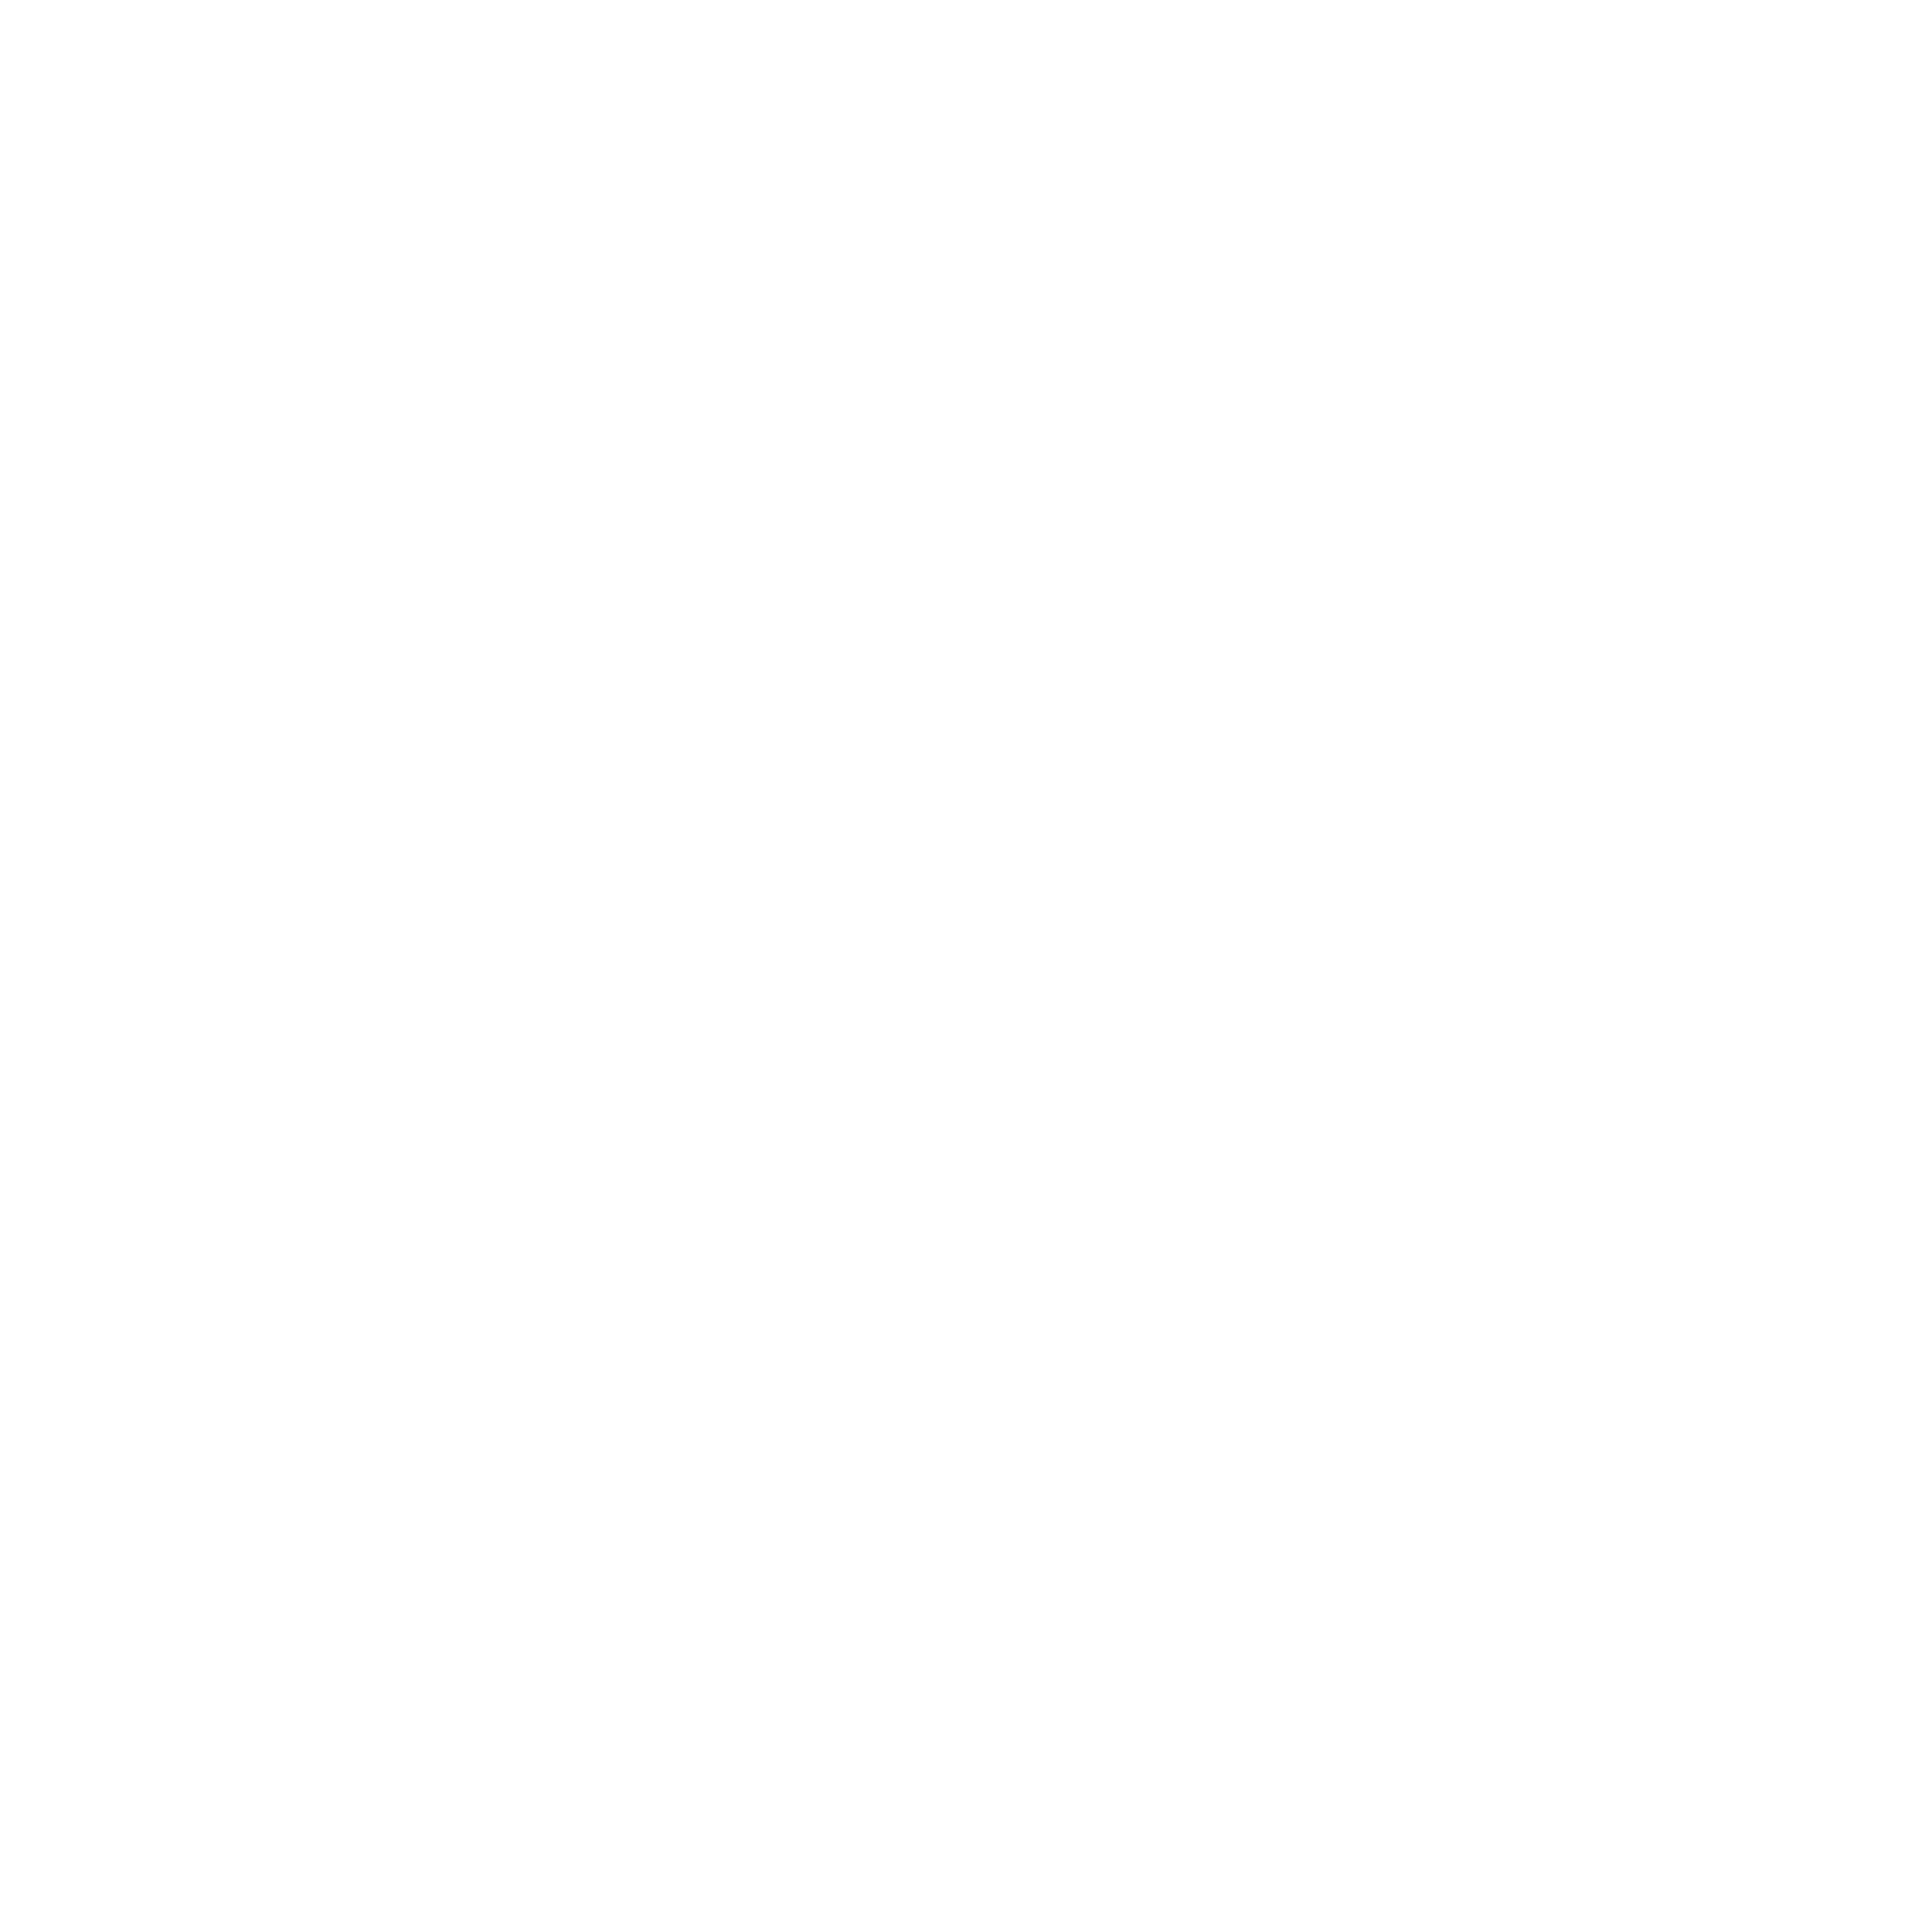 Restaurant & Bar La Cuchilla